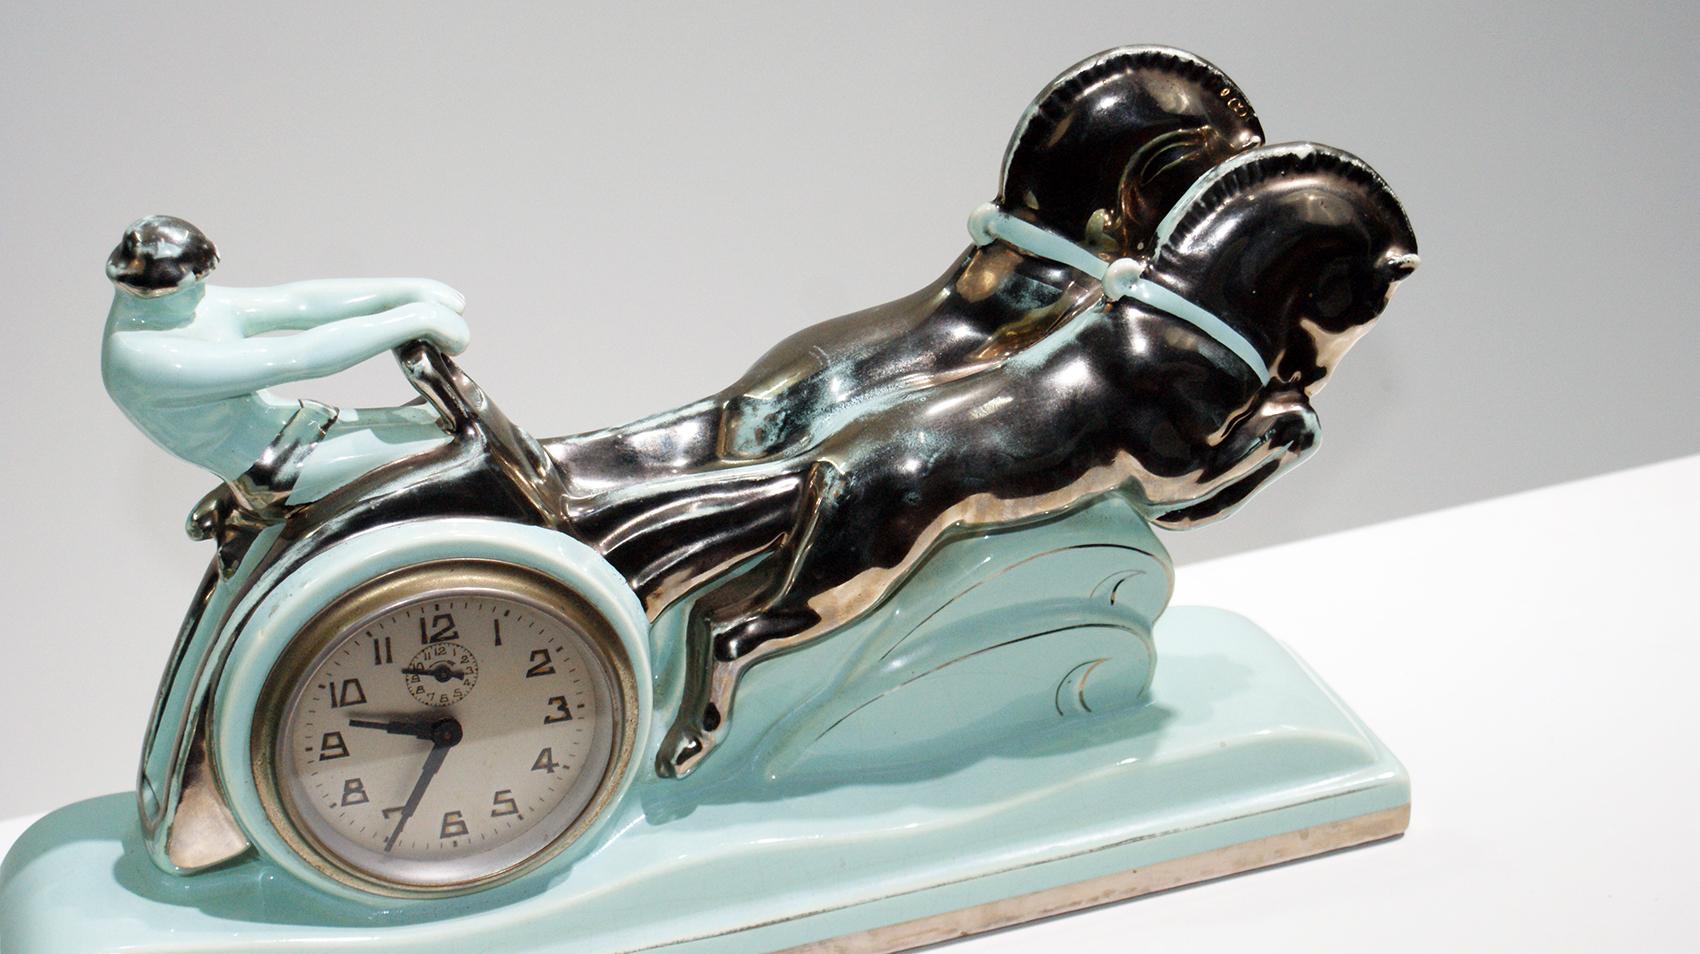 French Stunning Art Deco Enamel Ceramic Sculpture “Ben Hur Horse Racing Chariot